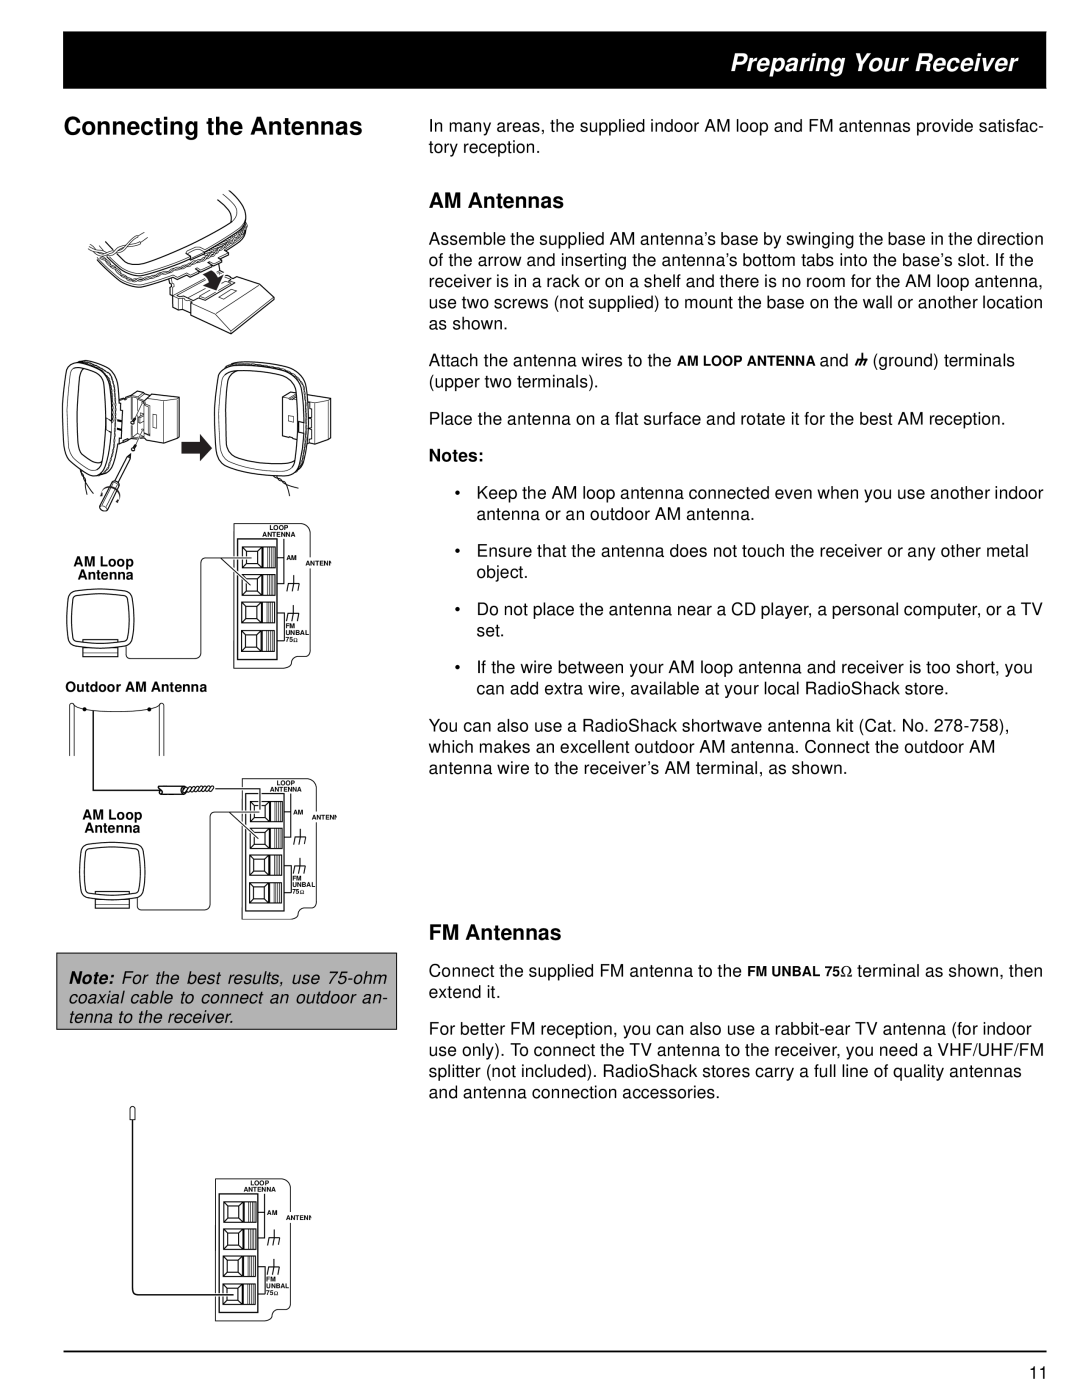 Panasonic STAV-3770 owner manual Connecting the Antennas, AM Antennas, FM Antennas, Preparing Your Receiver 